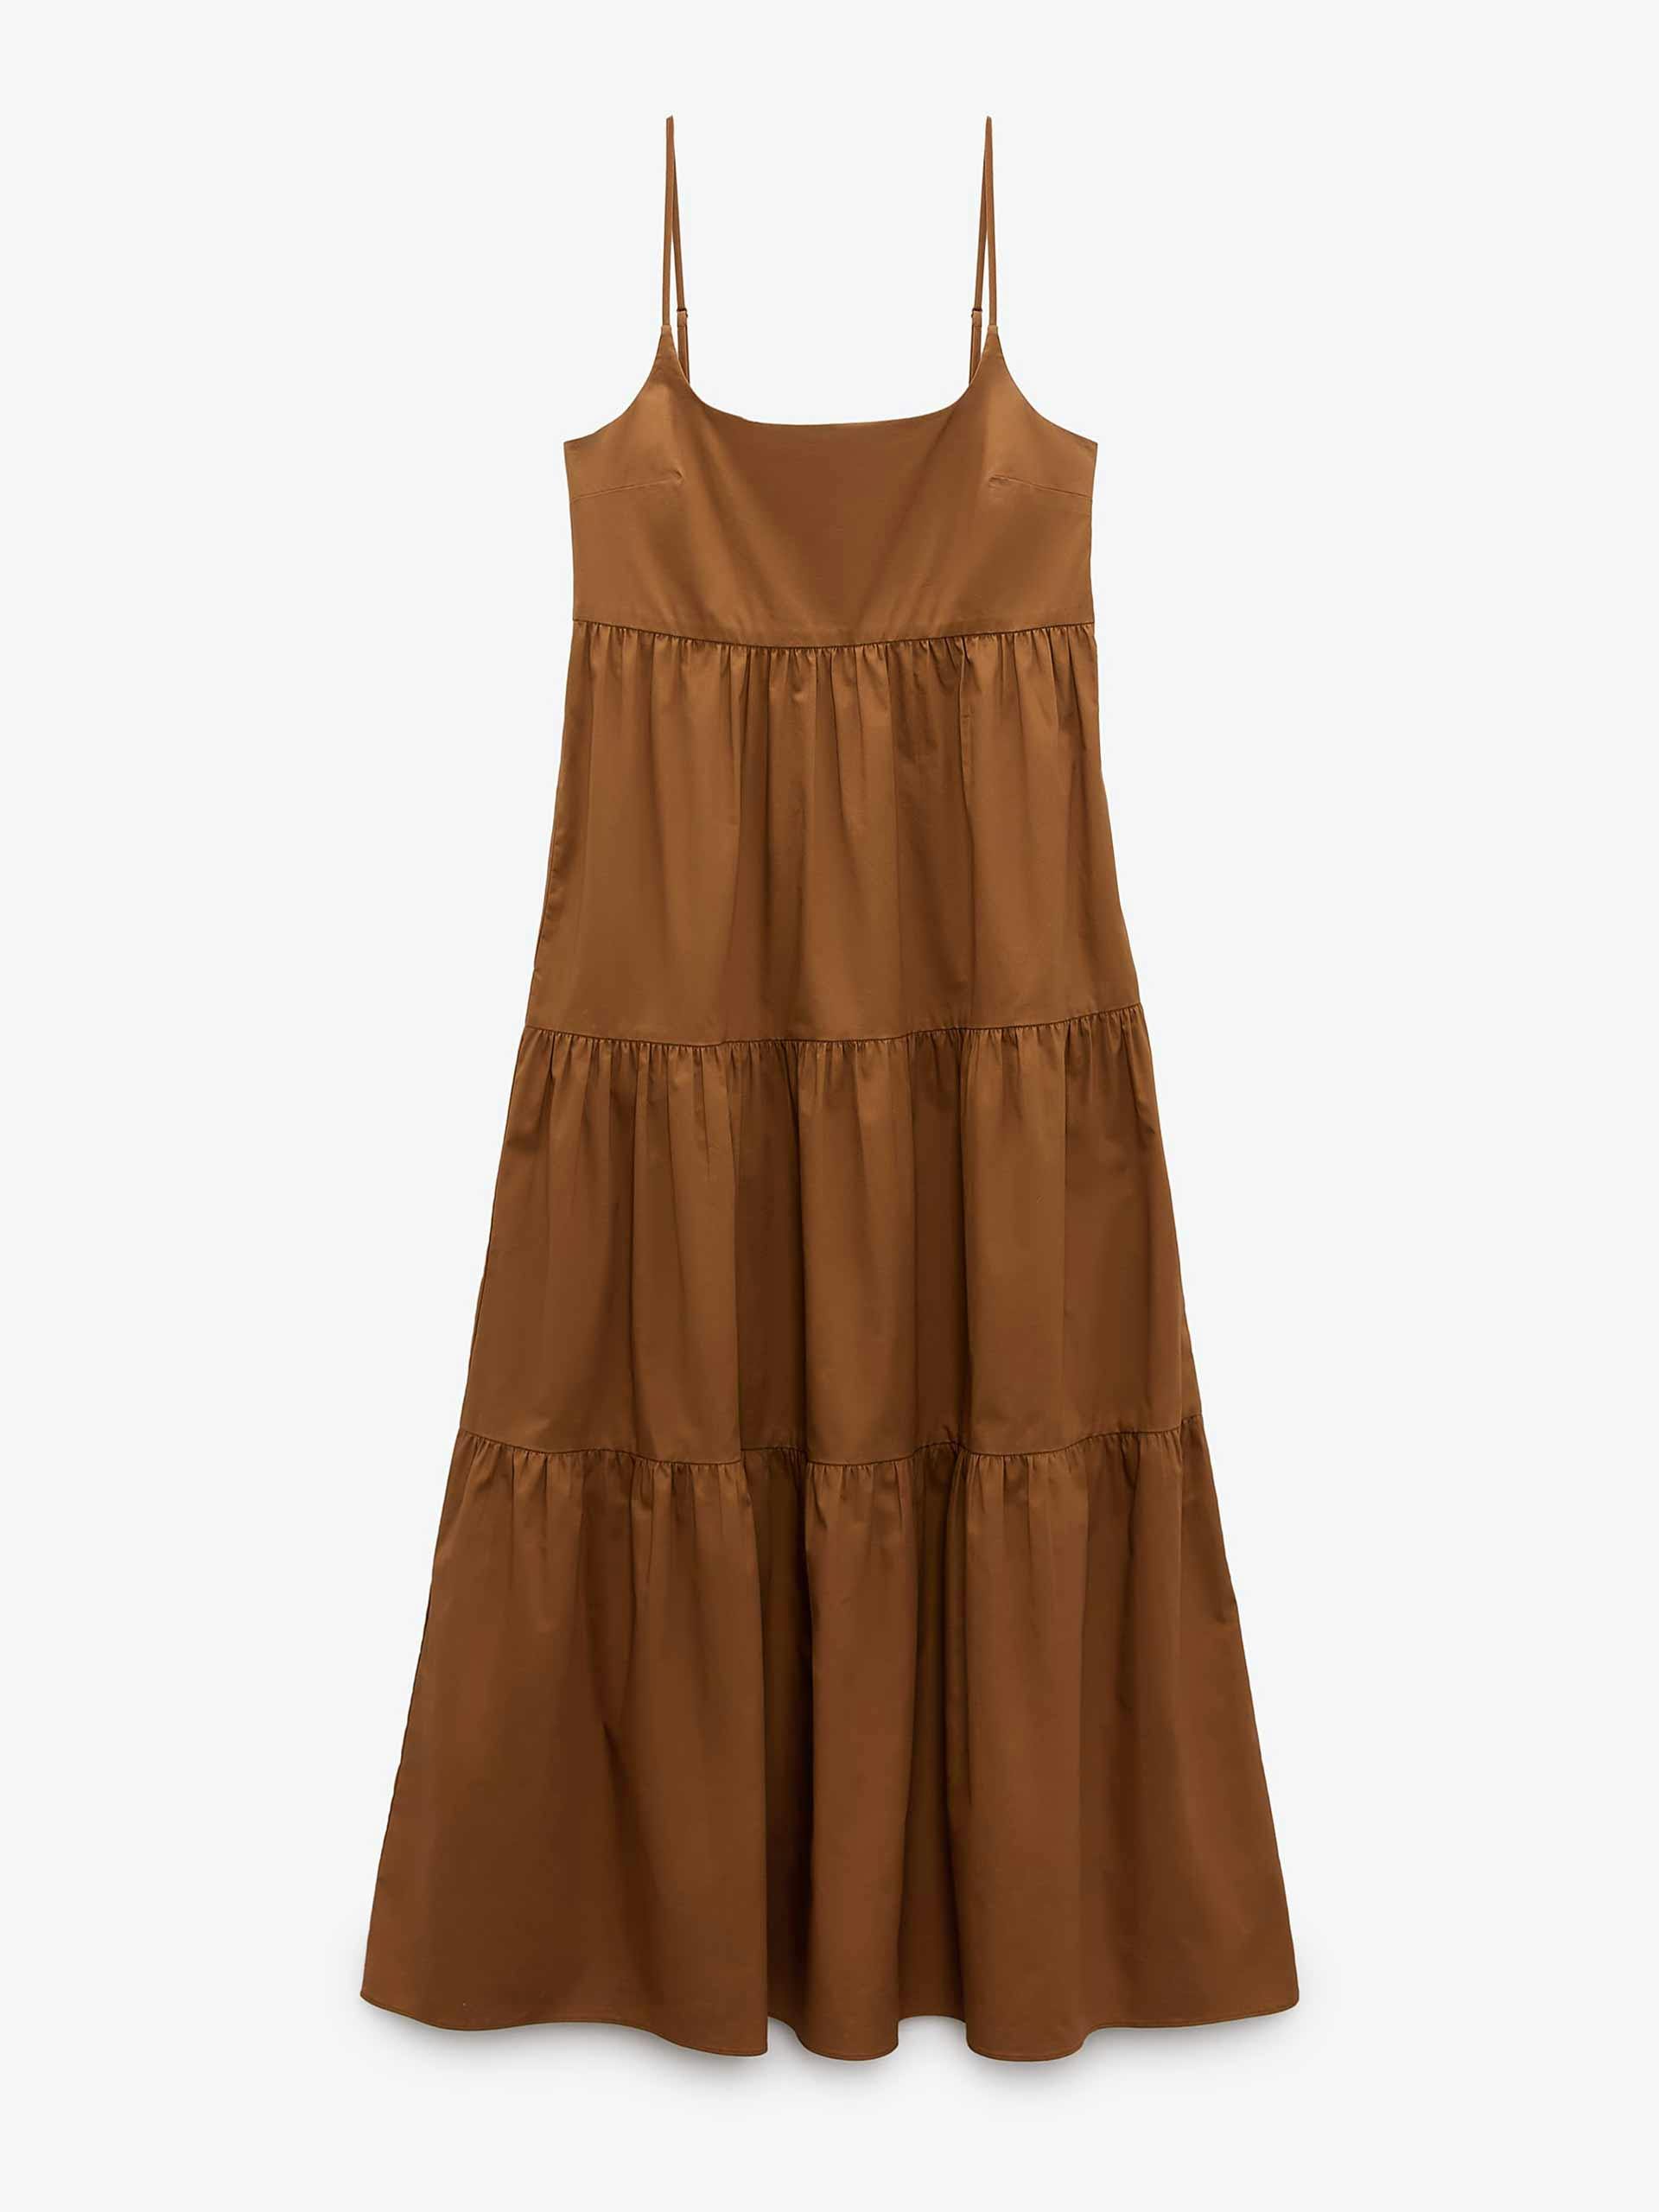 Brown tired poplin dress